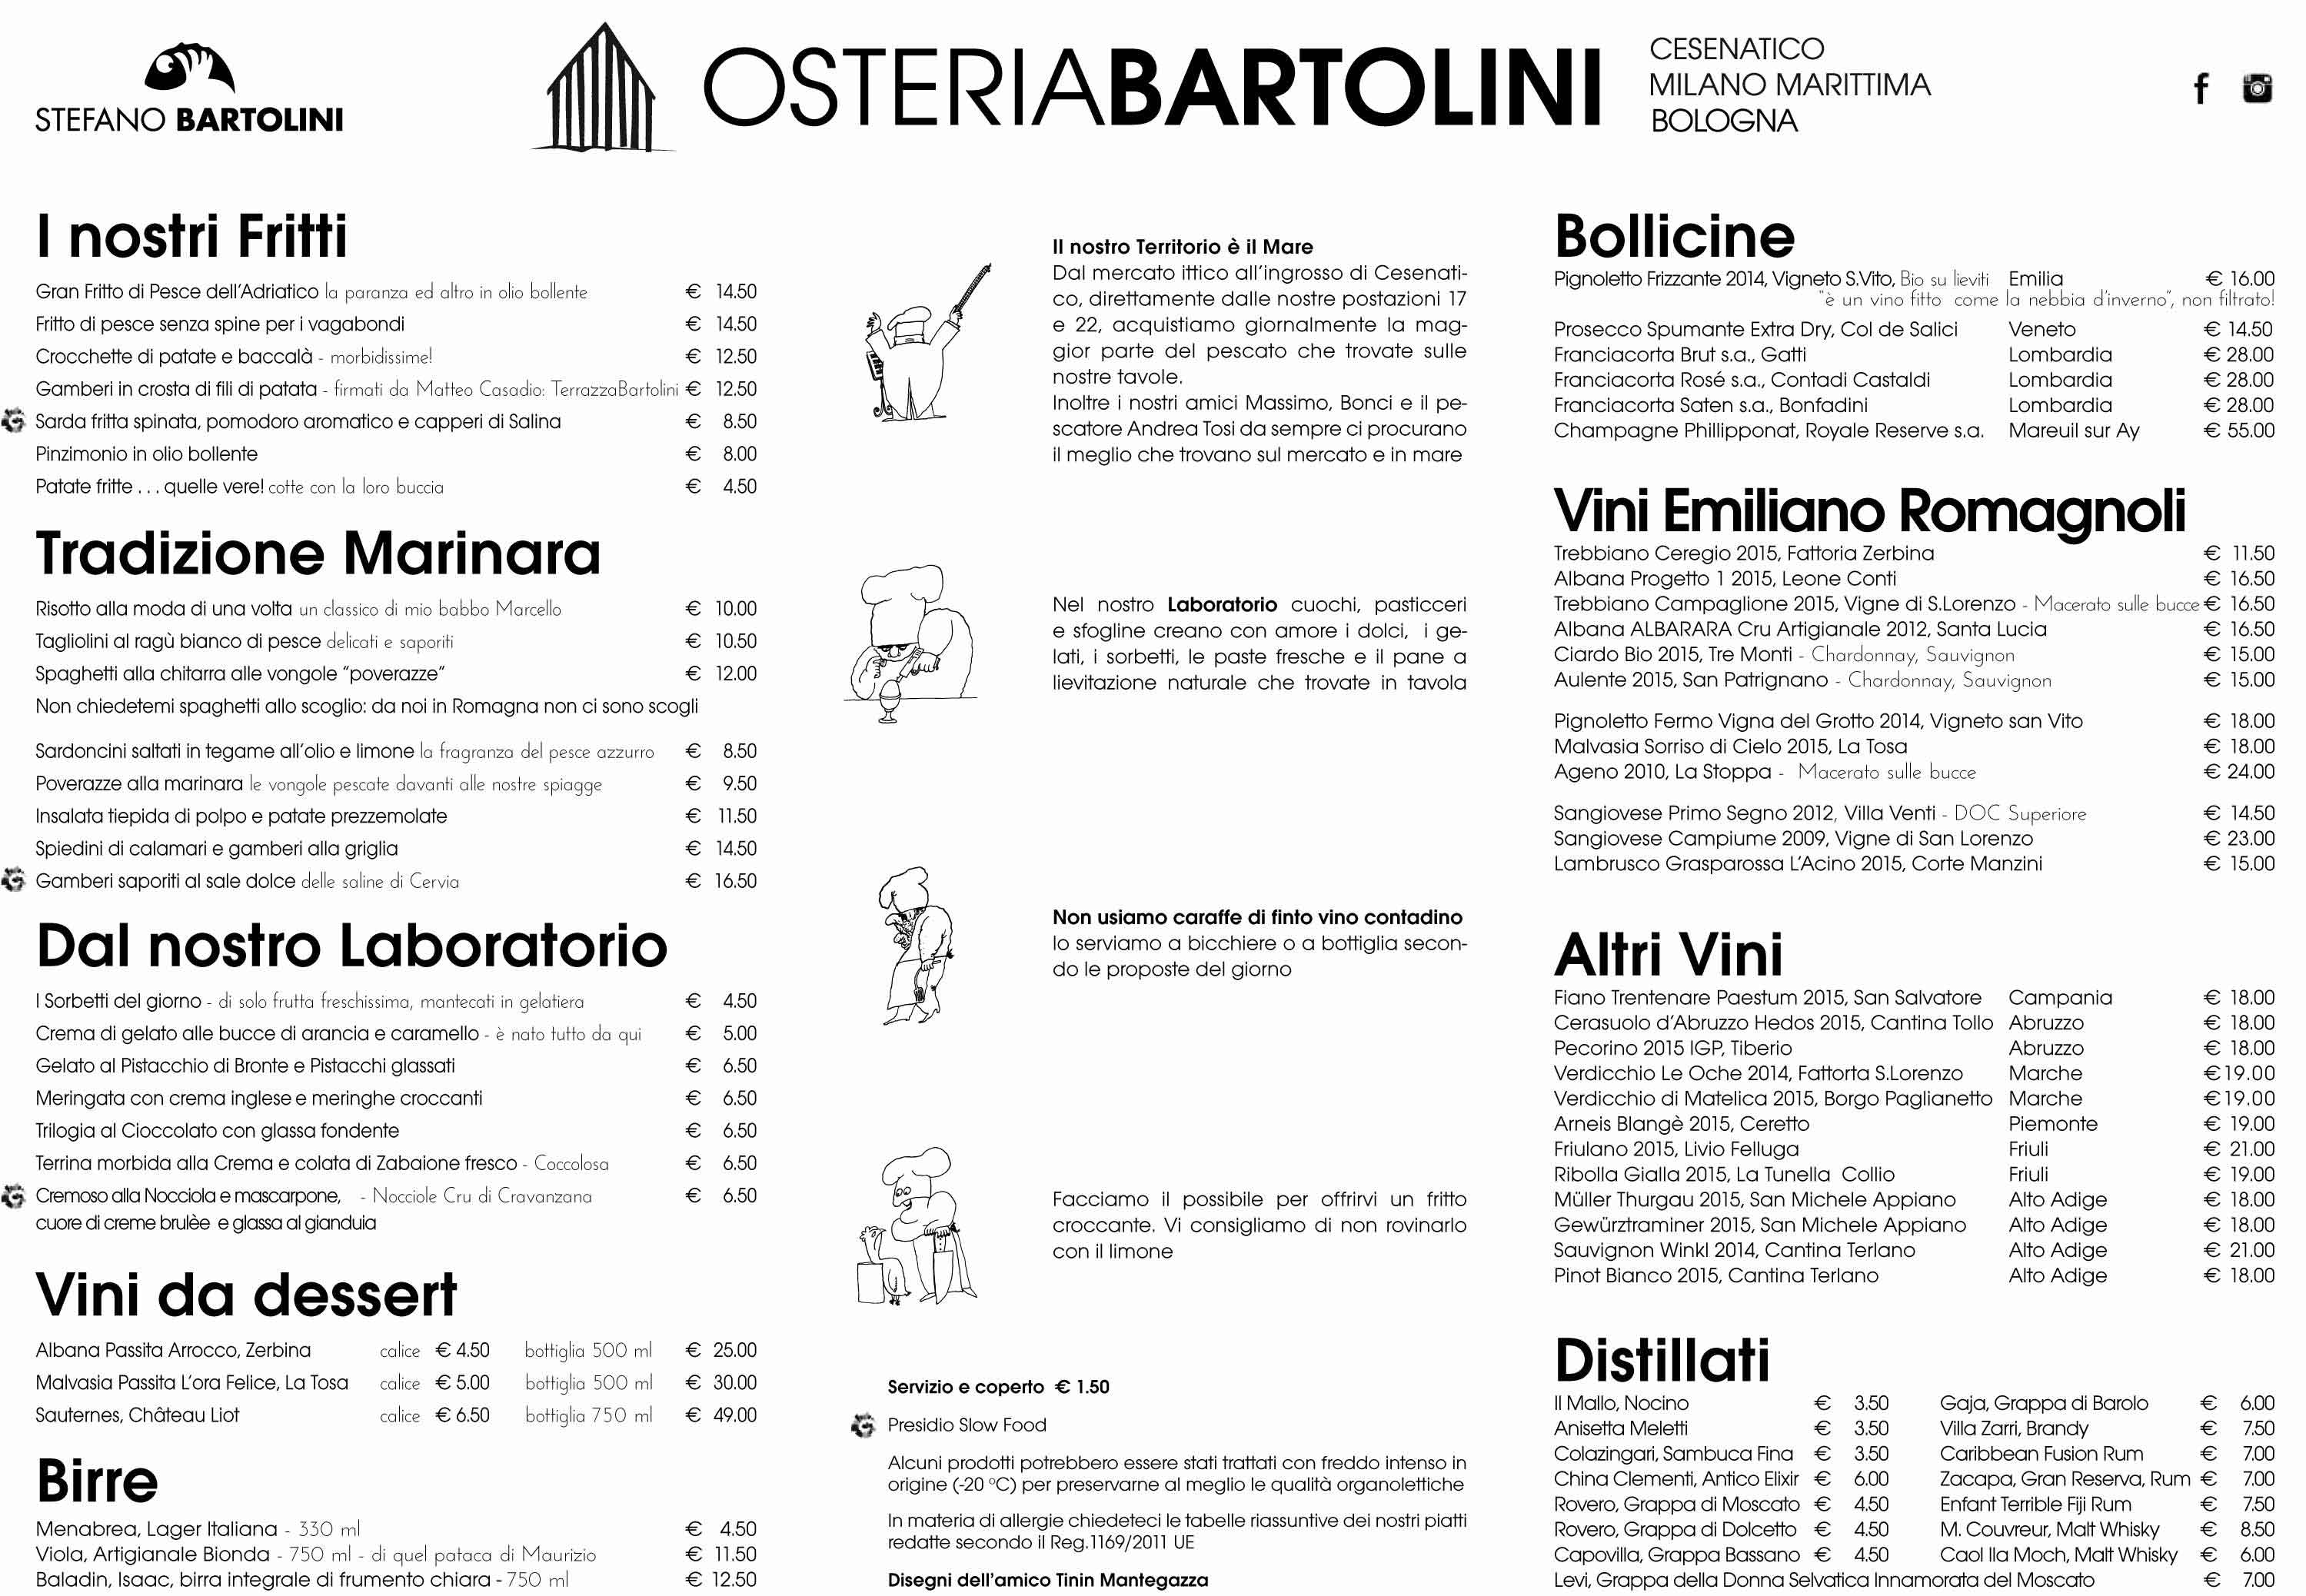 osteria-bartolini-bologna-menu